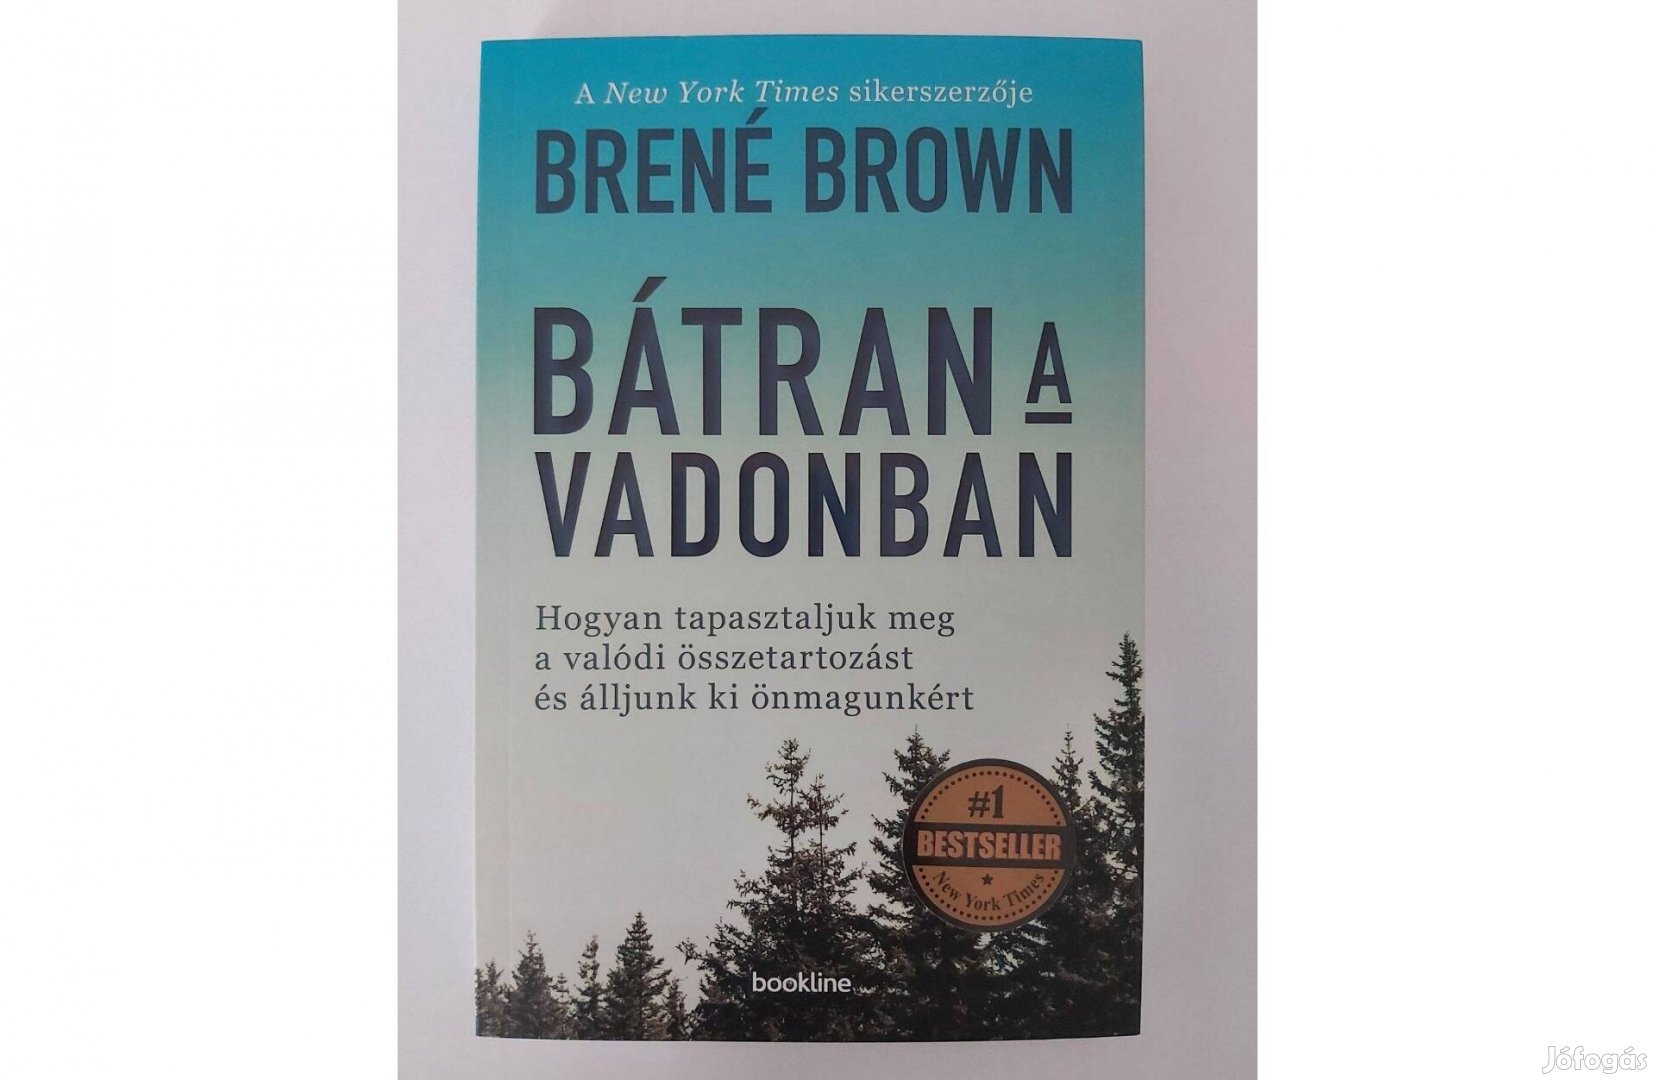 Brené Brown: Bátran a vadonban